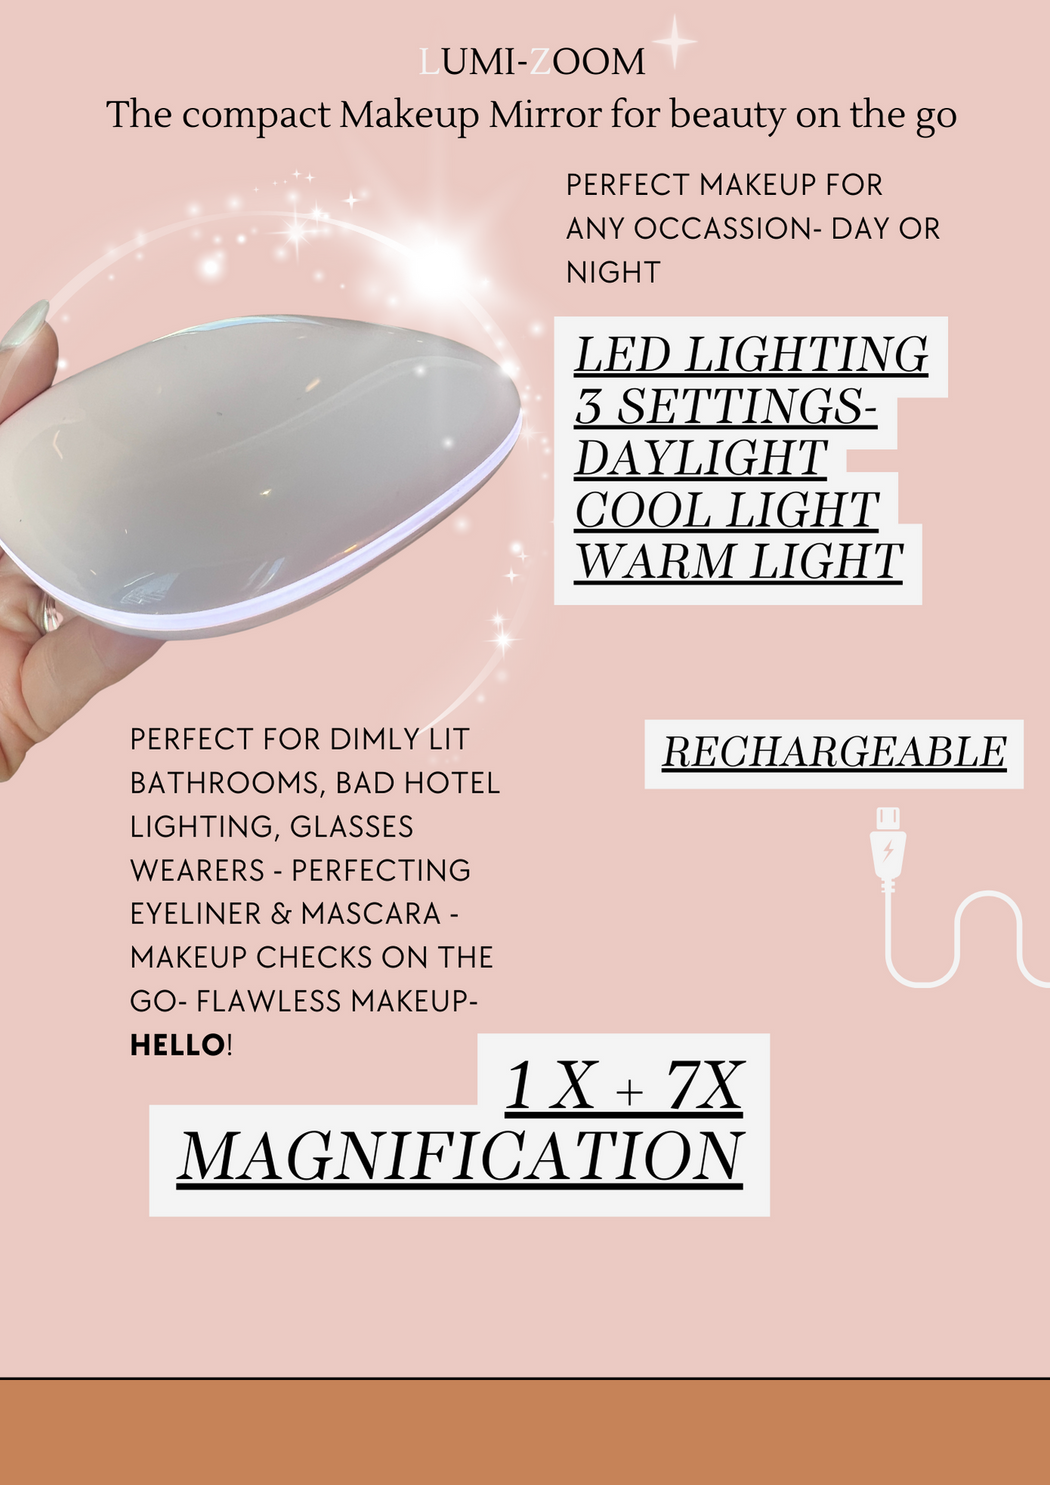 PREORDER Glowlux Lumi-Zoom Compact Makeup Mirror